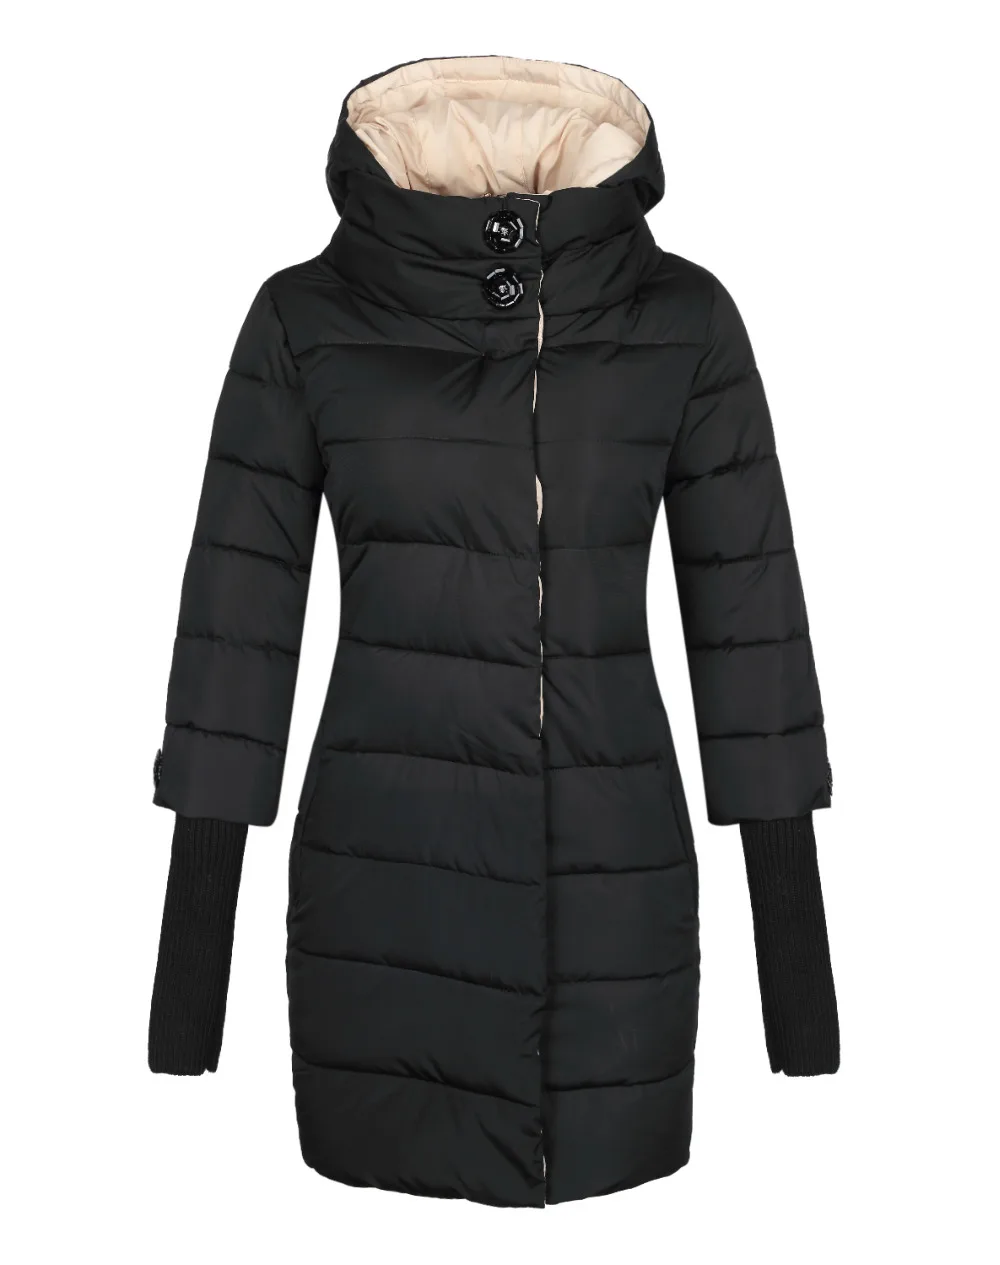 YILAIMEI Women's Lightweight Warm Jackets Packable Down Coat|coat lace ...